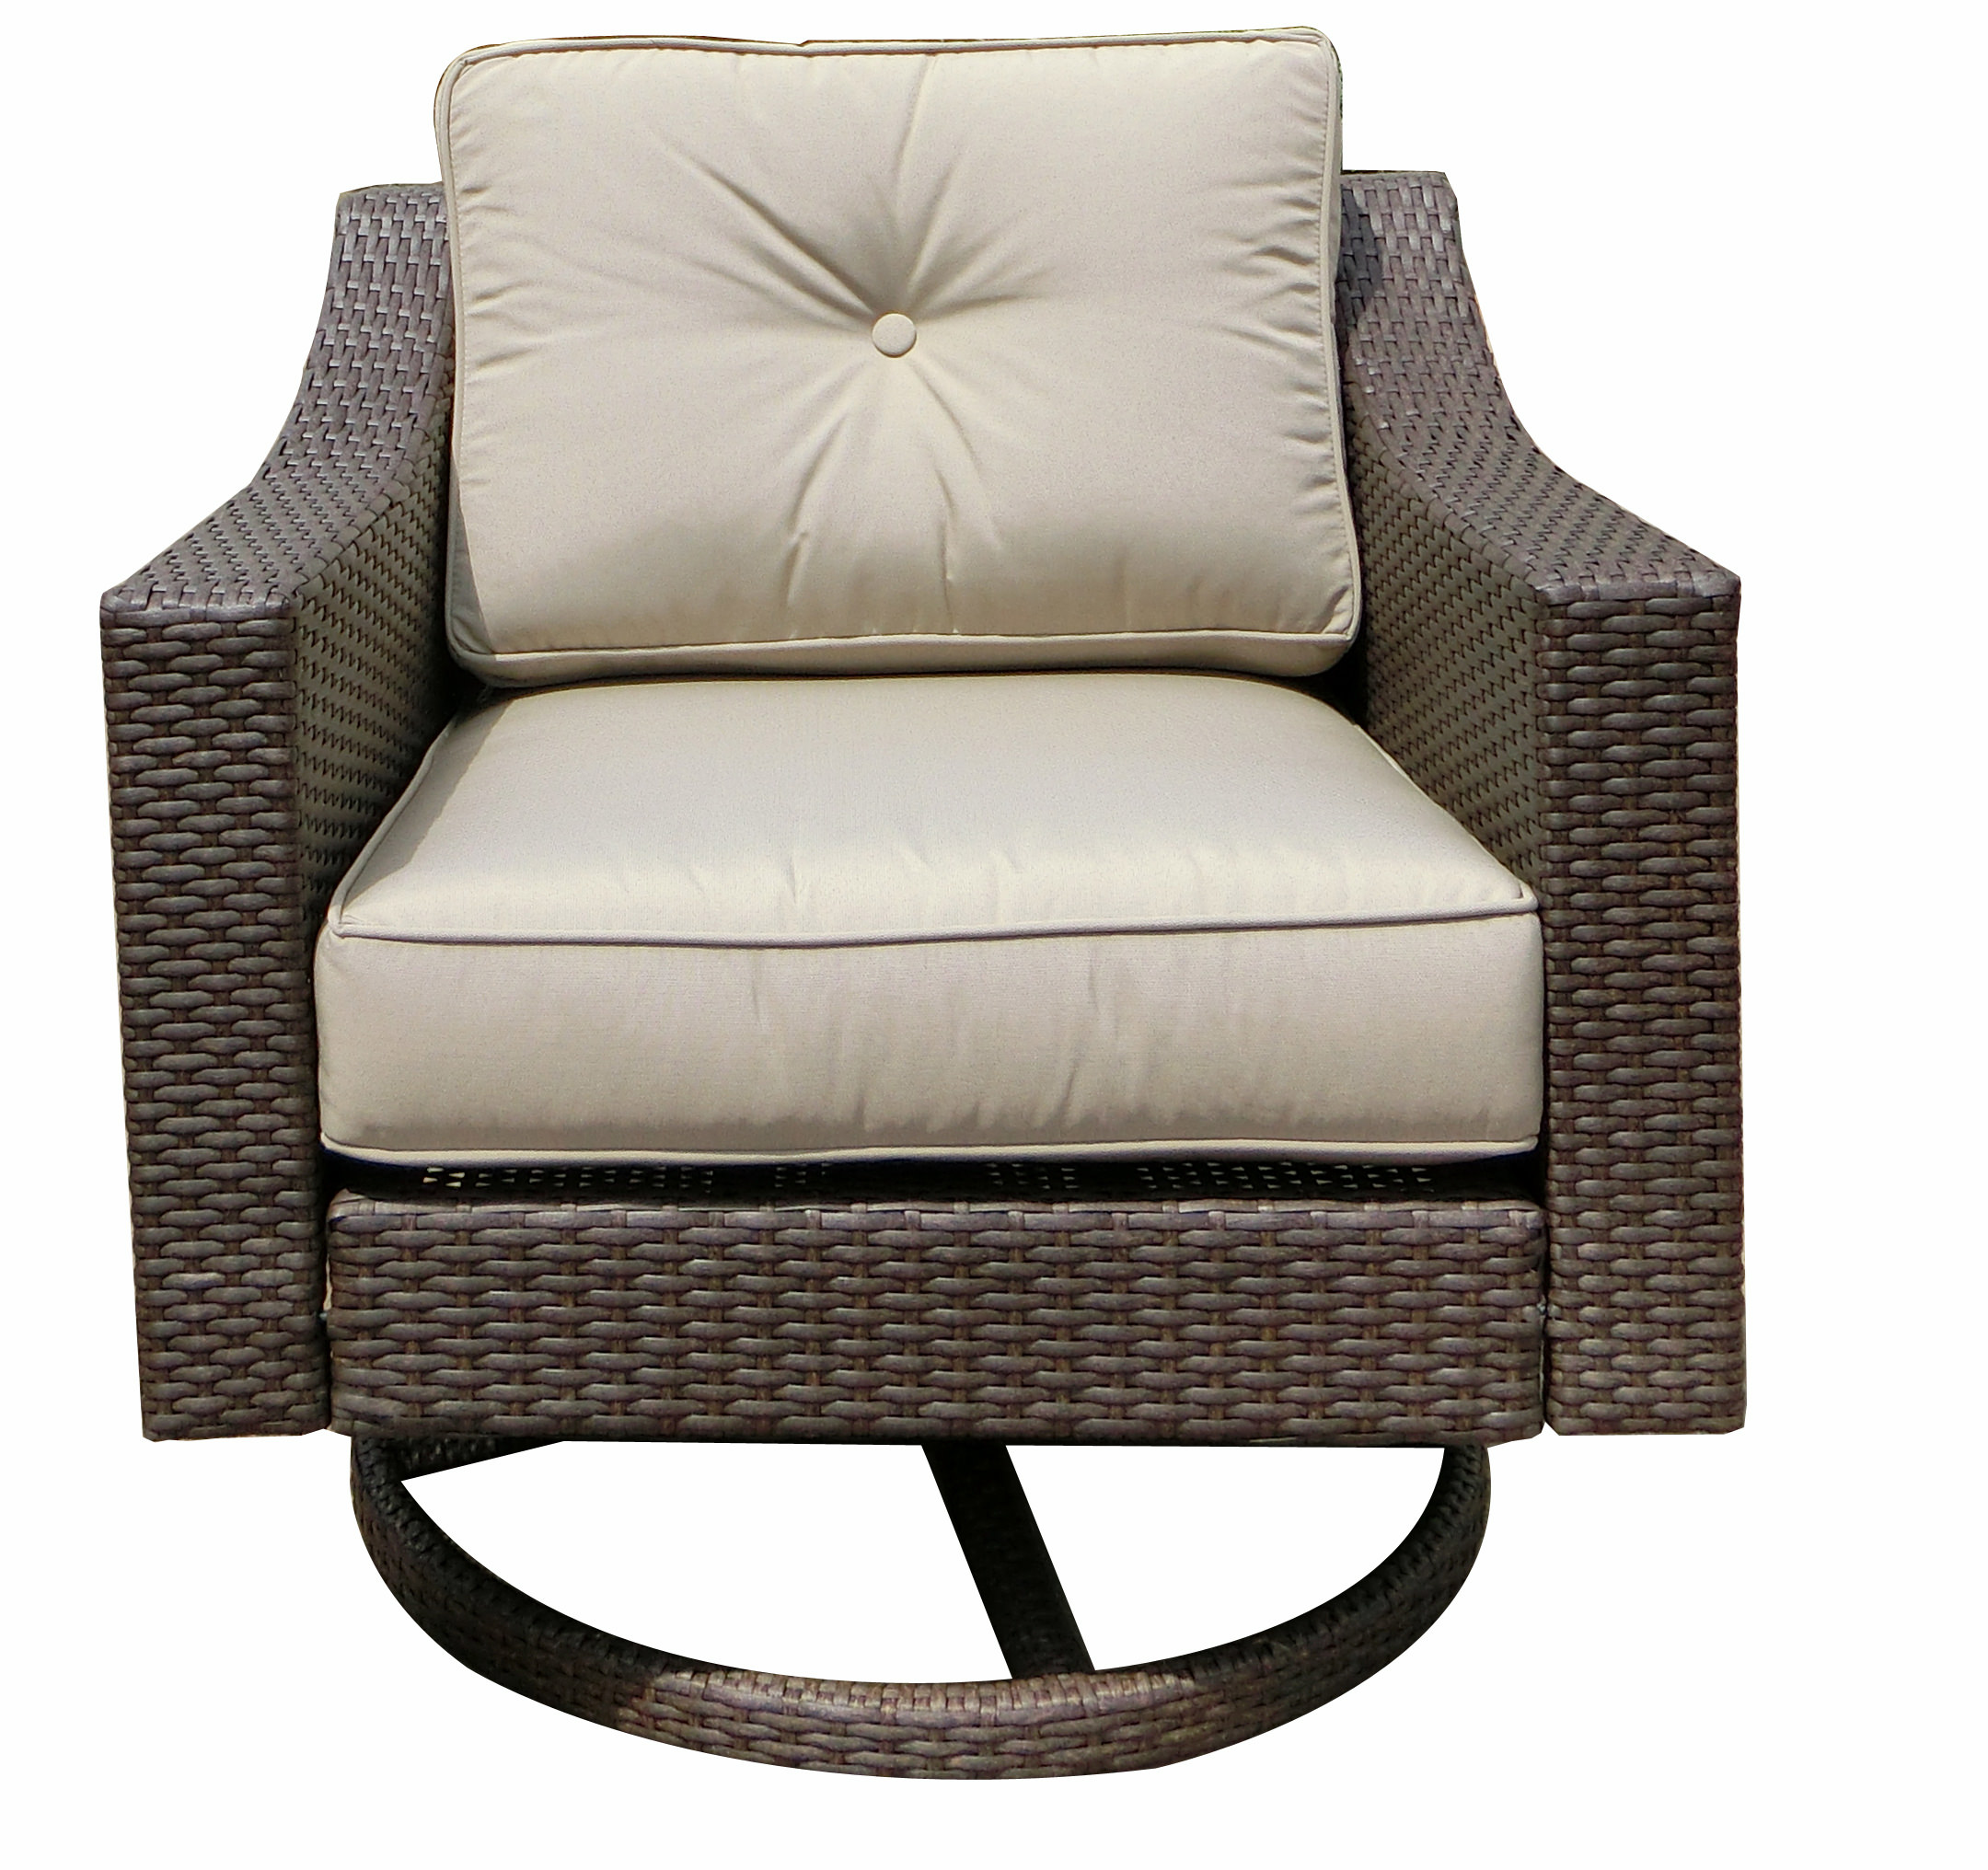 Sb-3775-11 South Beach Wicker Patio Swivel Club Chair